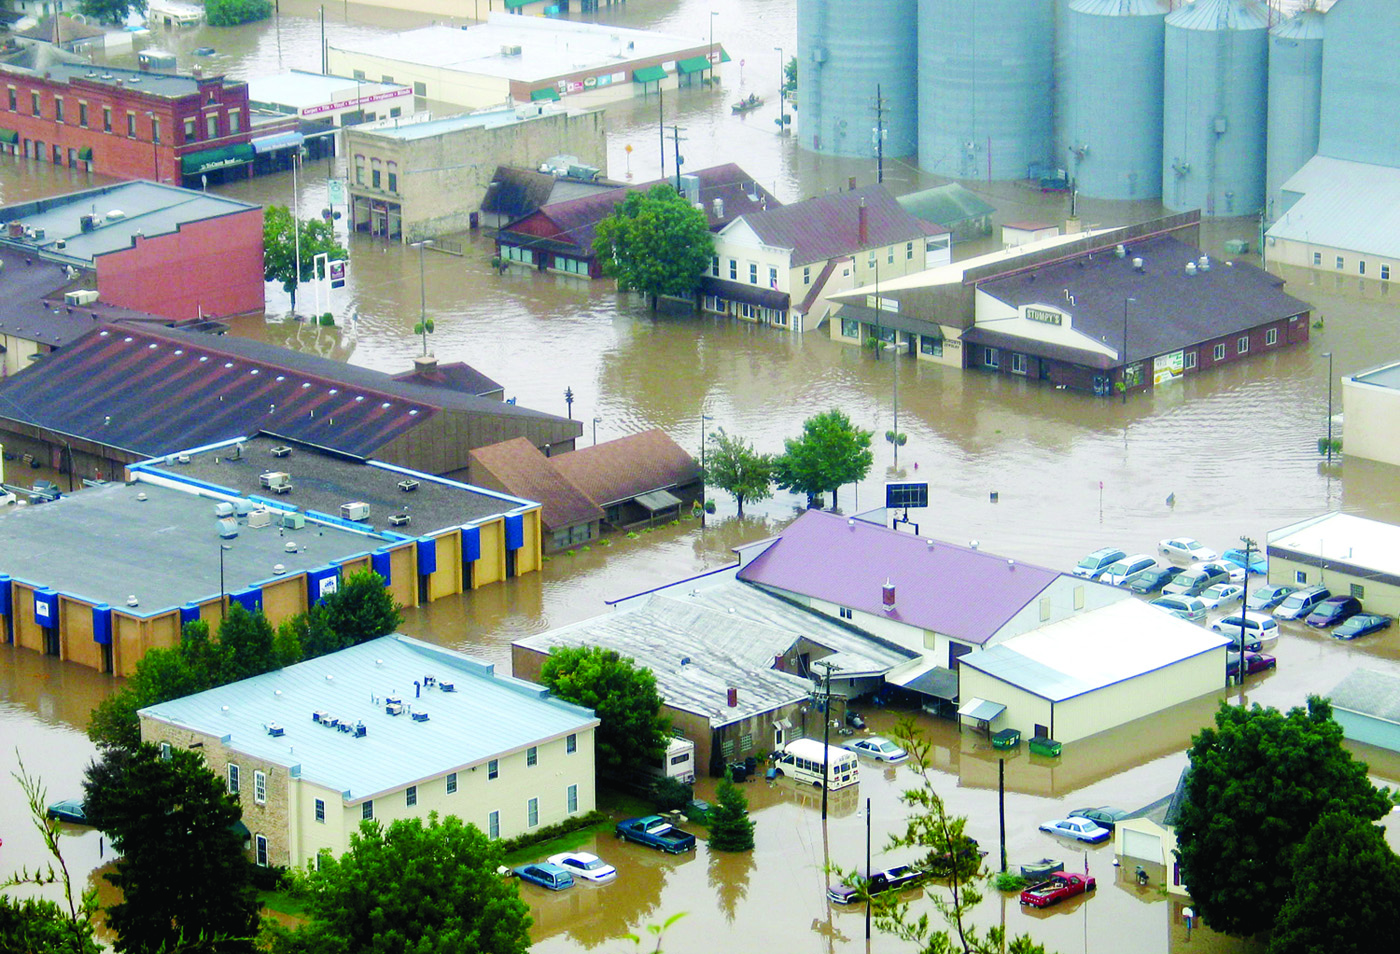 Rushford, Minnesota, near Hedin family farm, shown flooded in August 2007